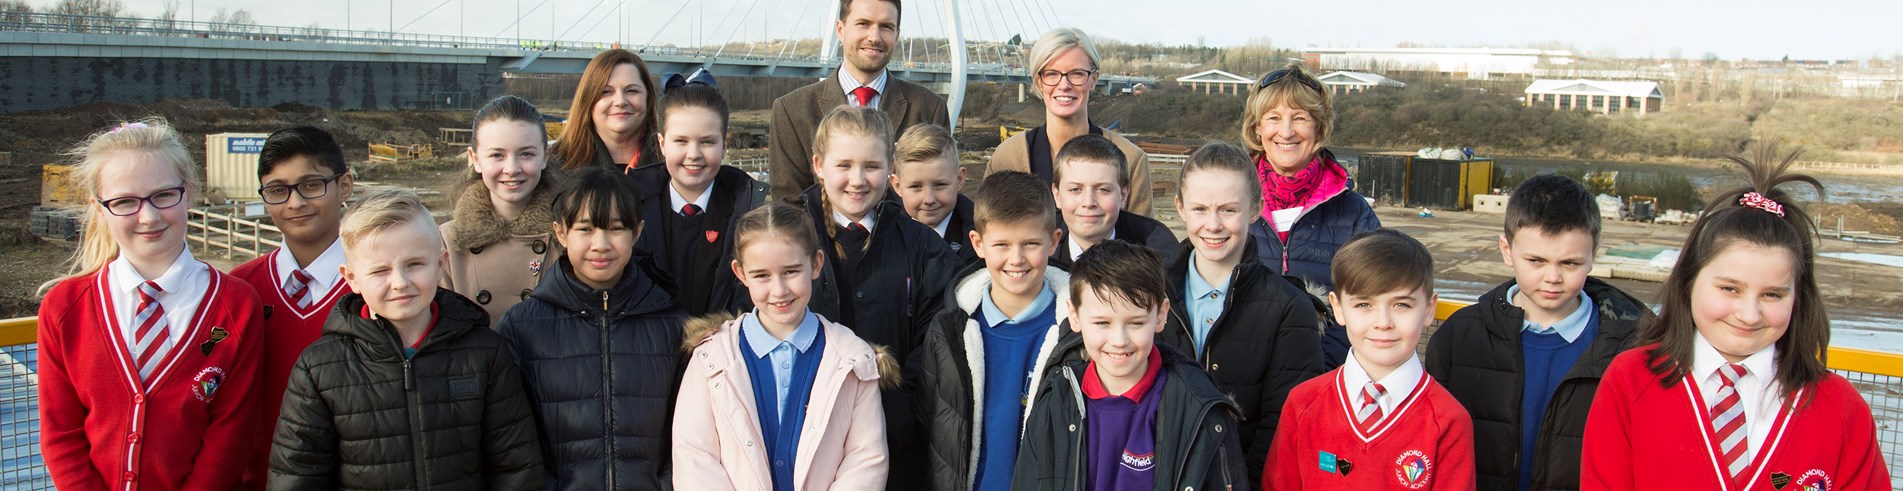 Pupils meet Prince William and Princess Kate!